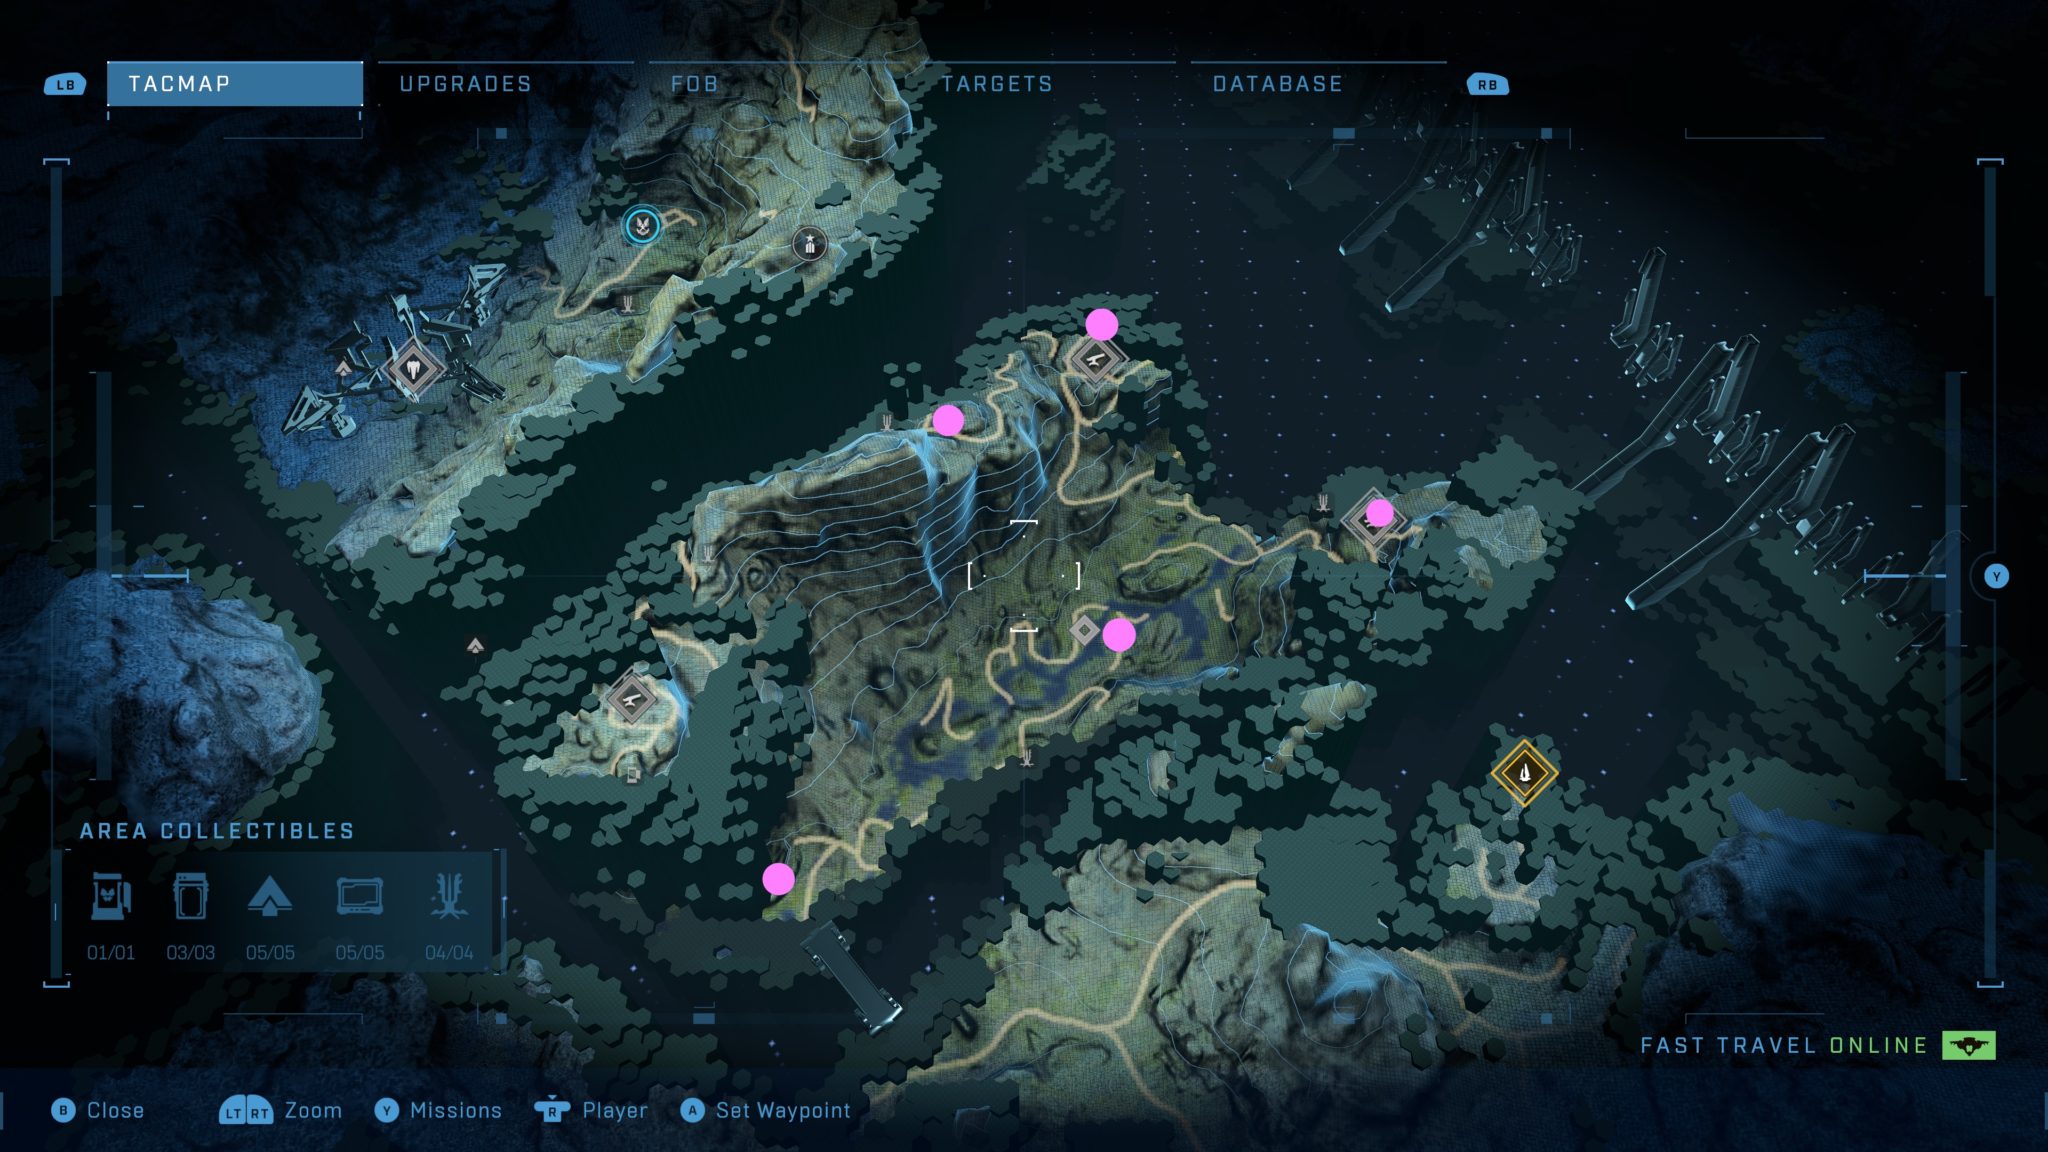 Halo Infinite Central Region Pelican Down Mission Spartan Core Locations Nightlygamingbinge 2297